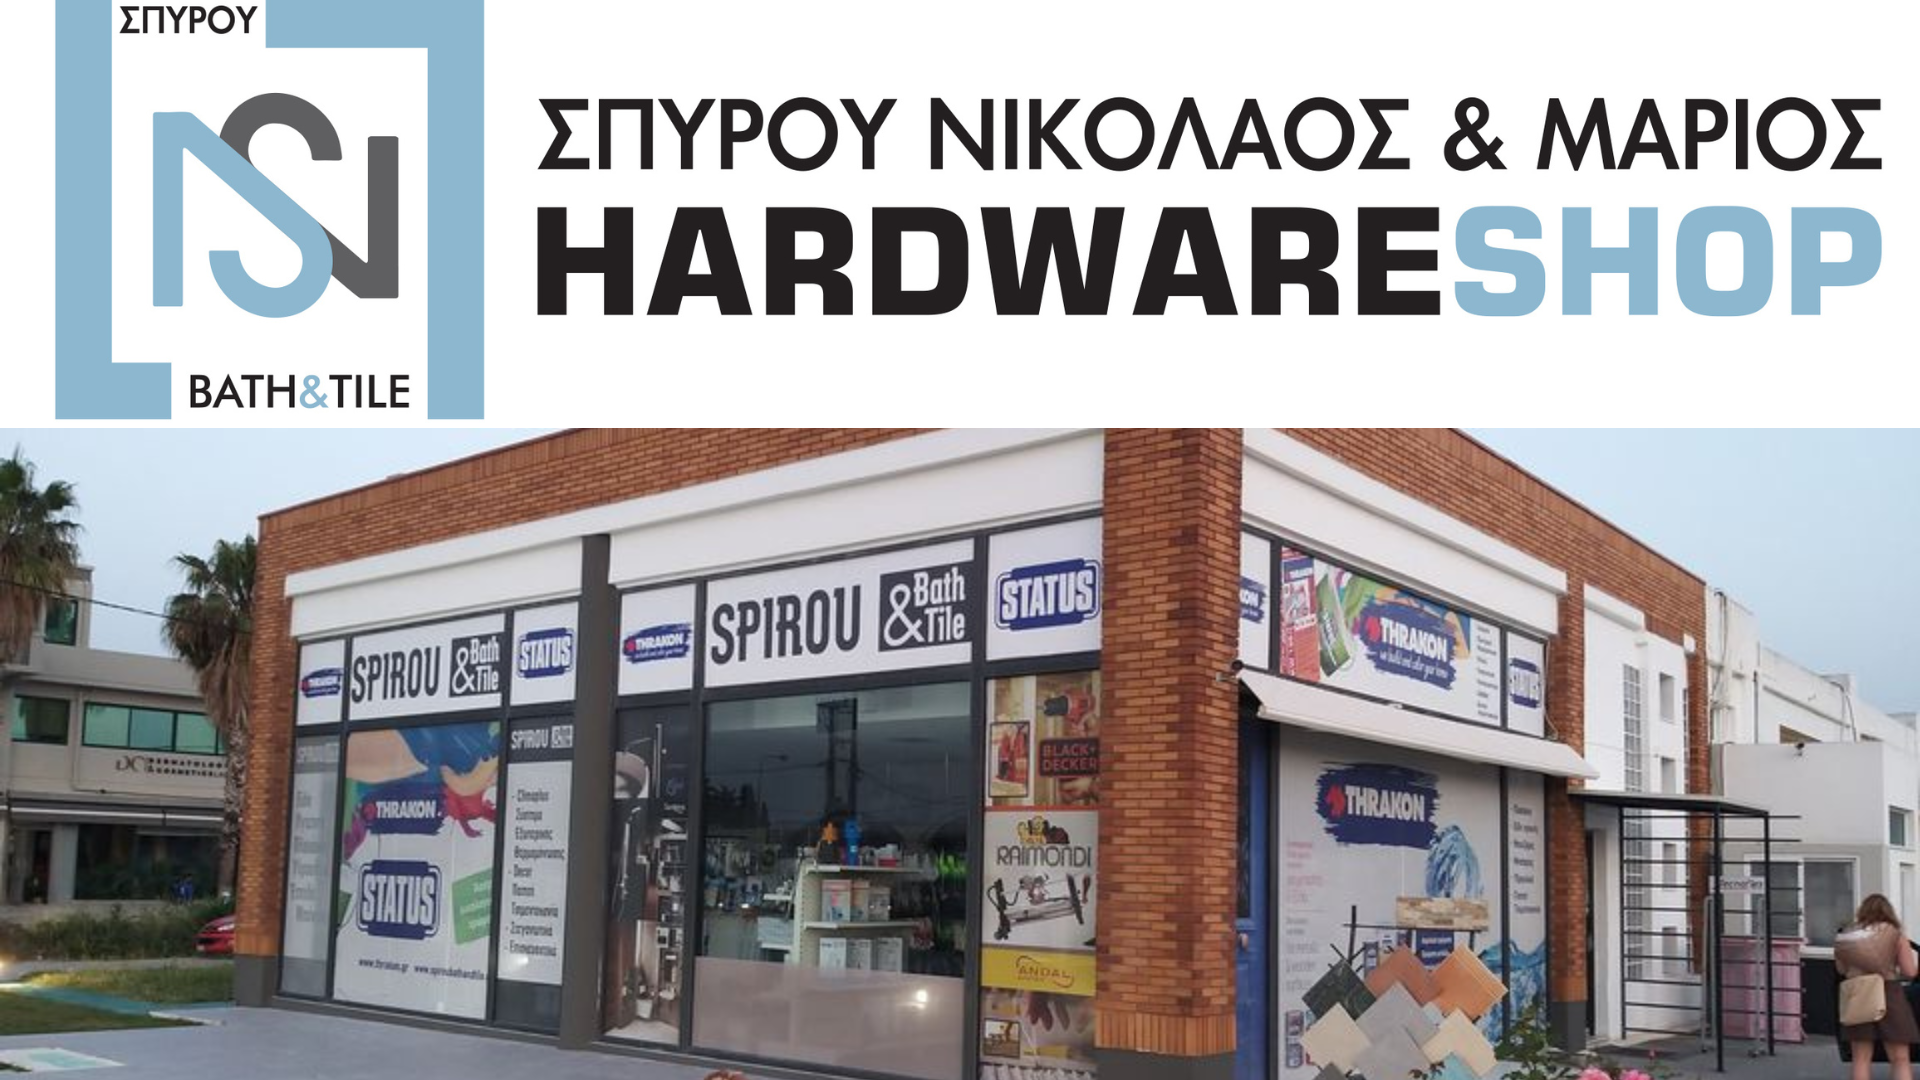 Spirou Hardware Shop